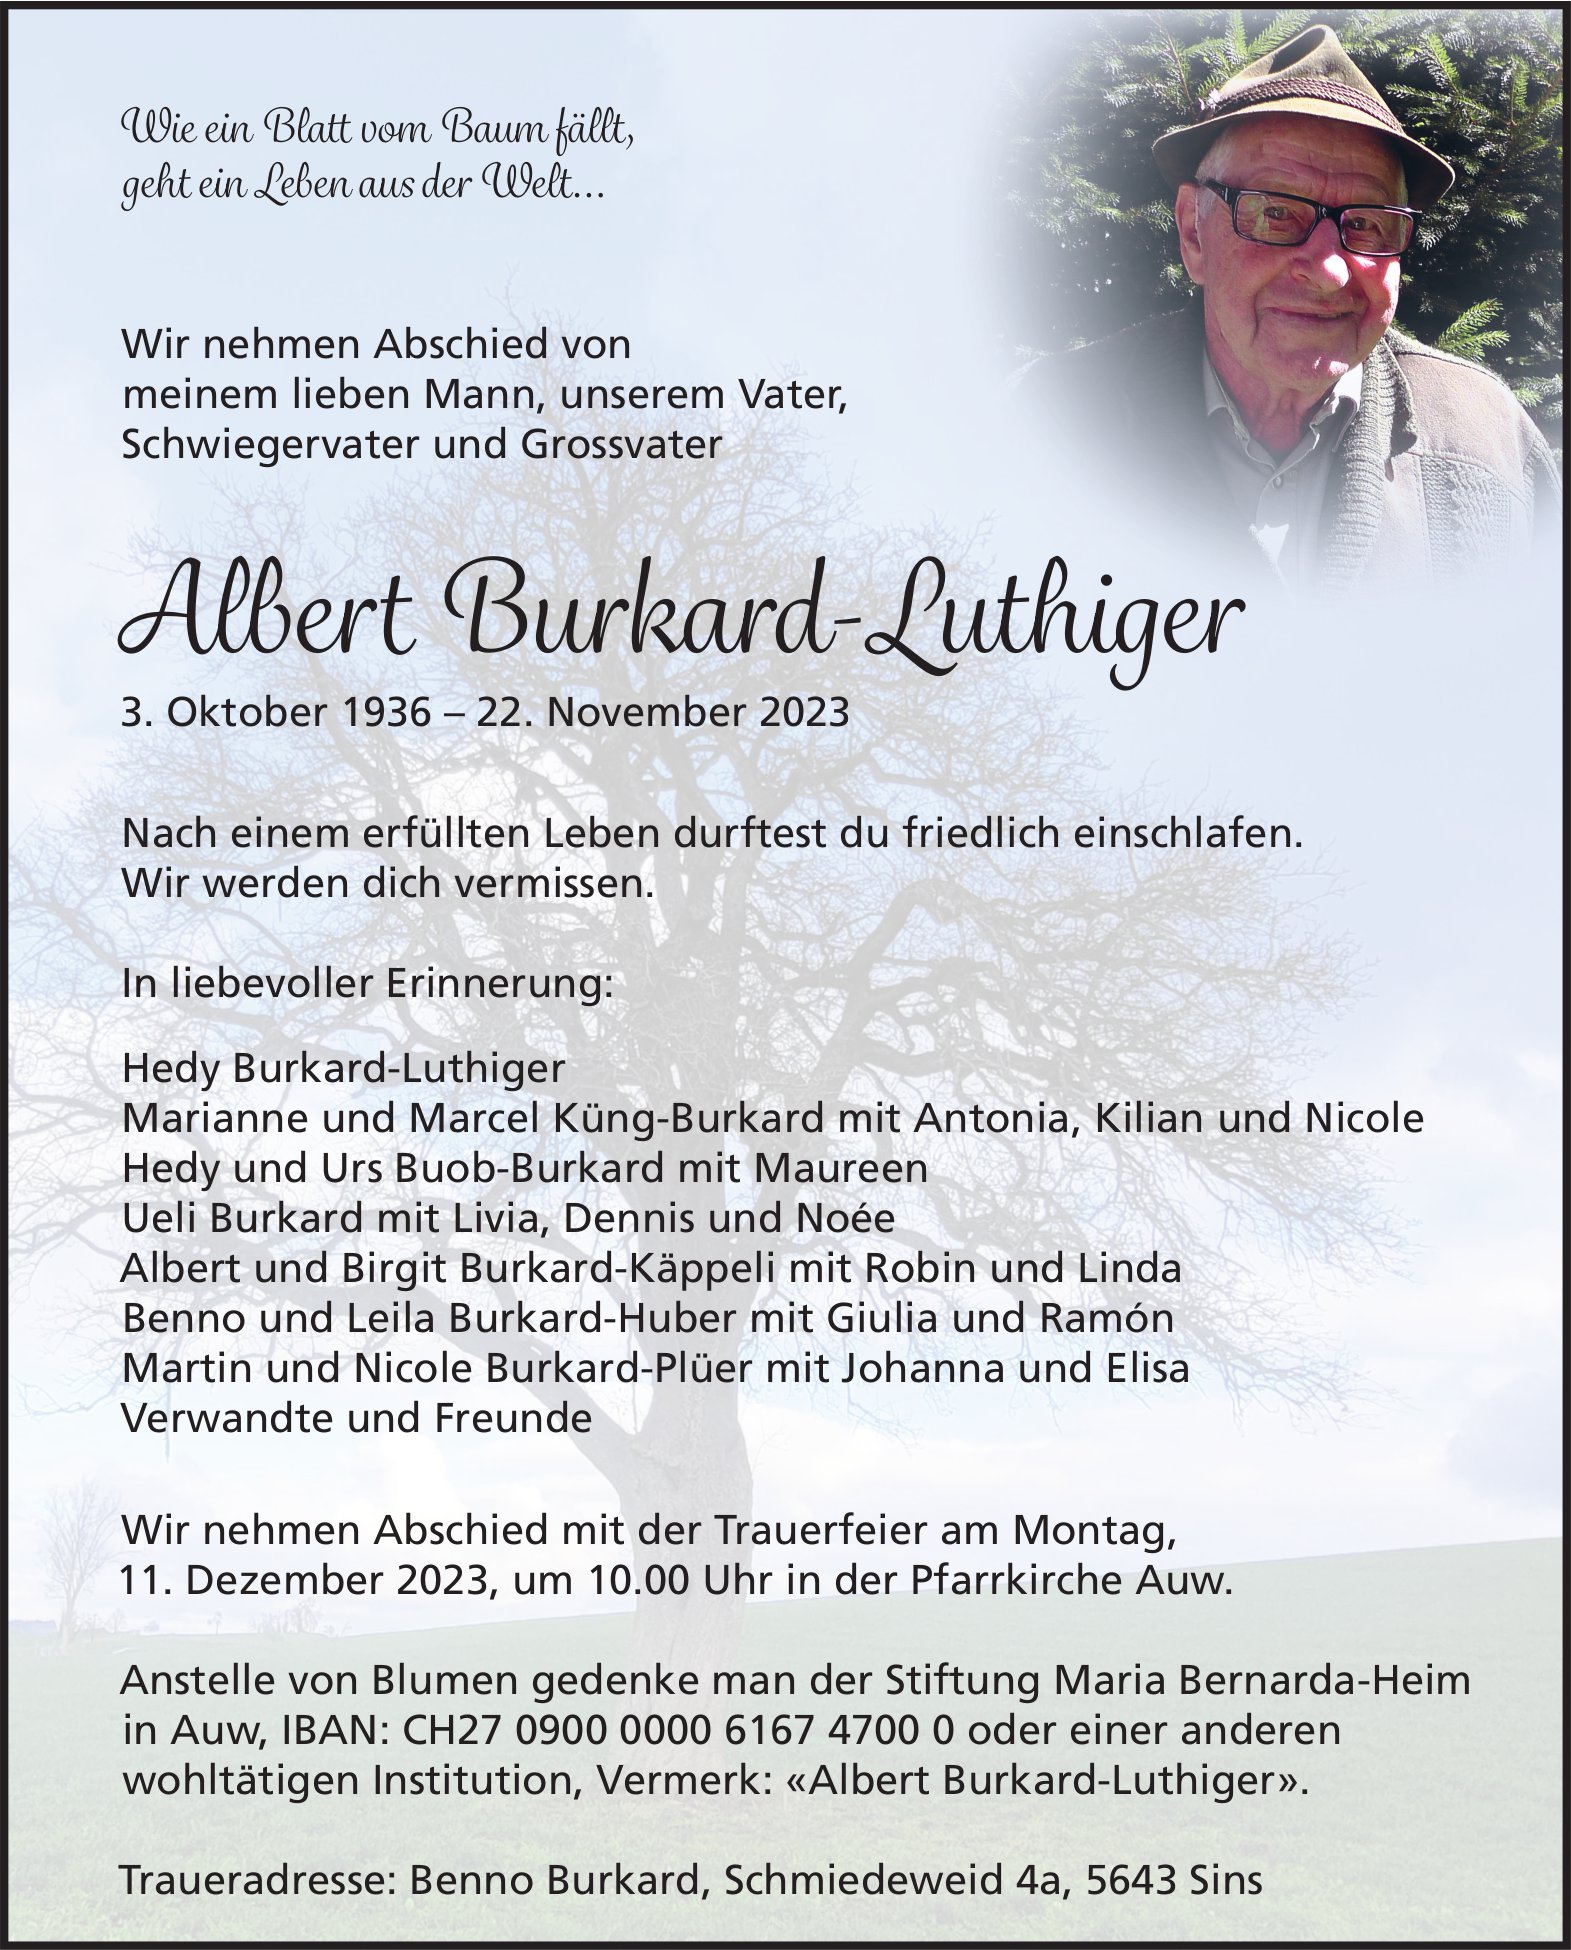 Burkard-Luthiger Albert, November 2023 / TA